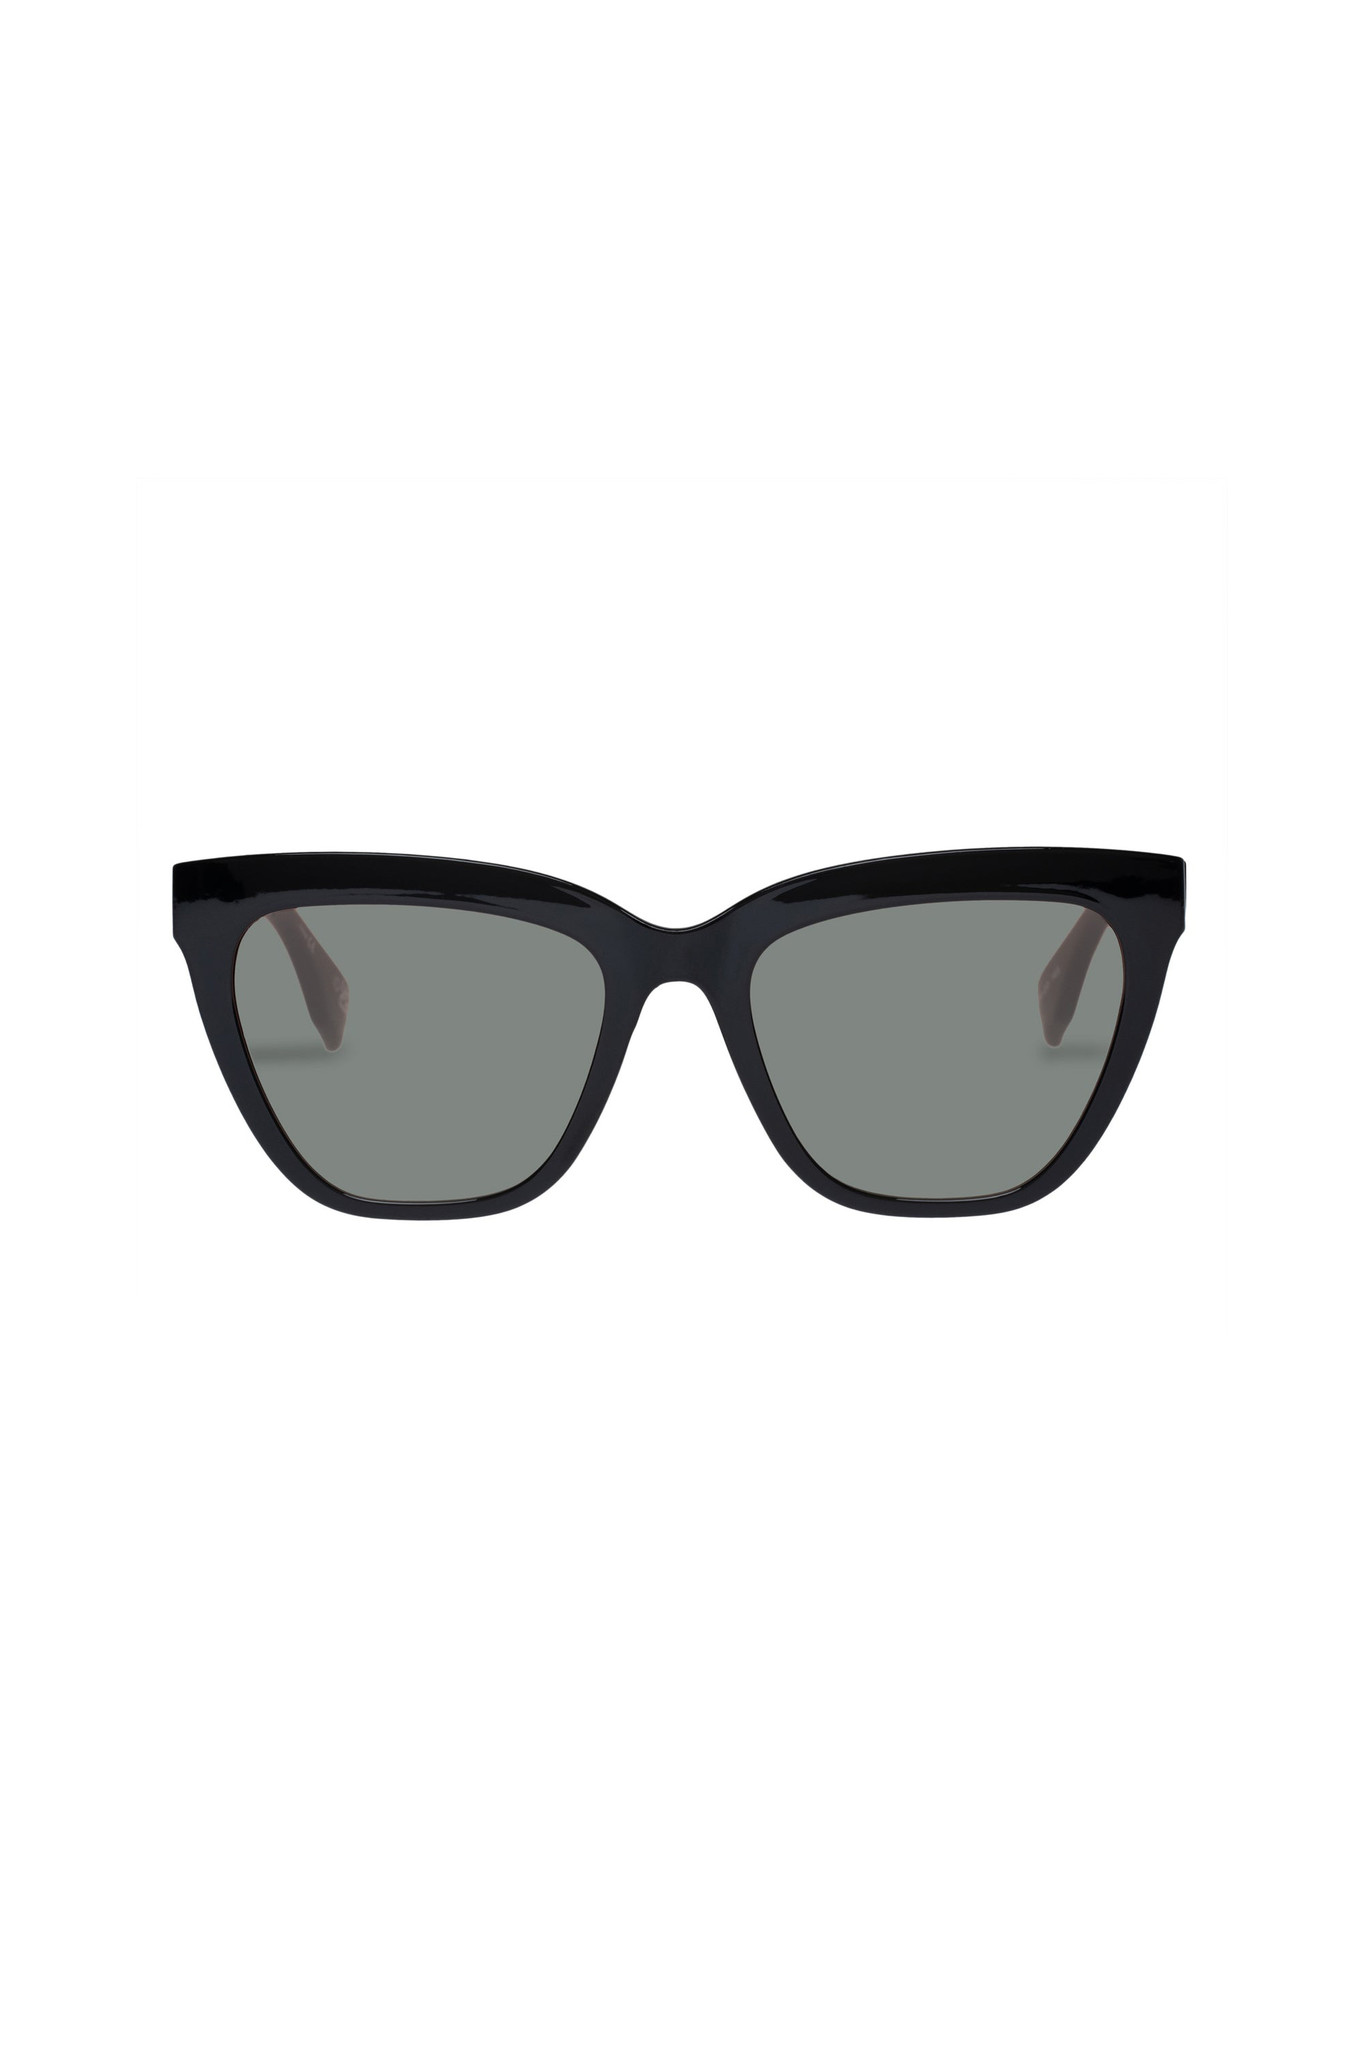 Enthusiplastic Sunglasses - Black // Le Sustain-1